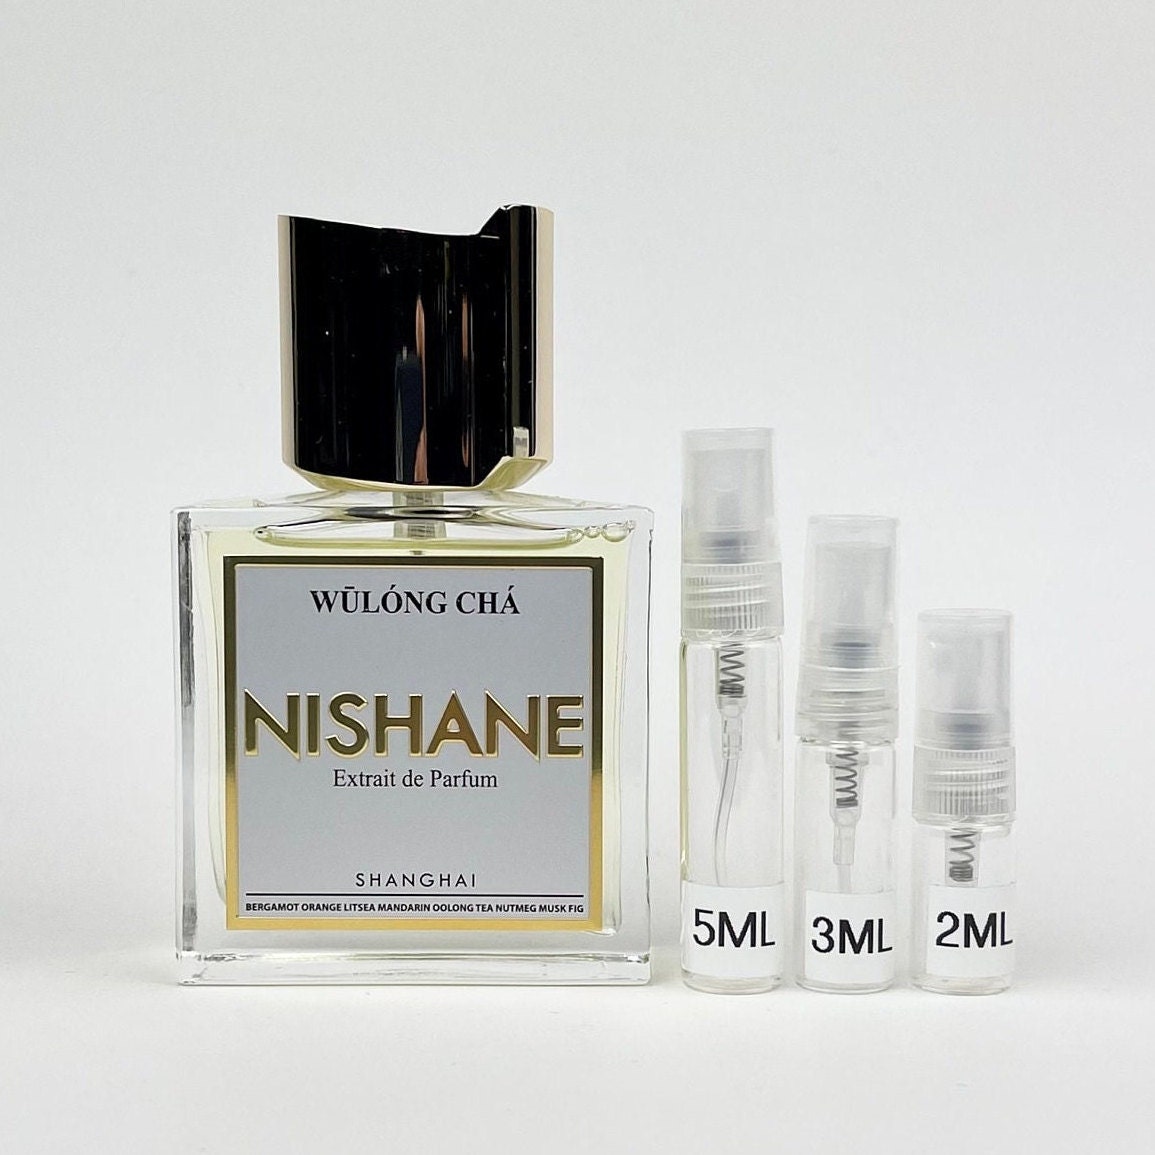 Nishane Wulong Cha Extrait de Parfum Sample 2ml 3ml 5ml - Etsy ...